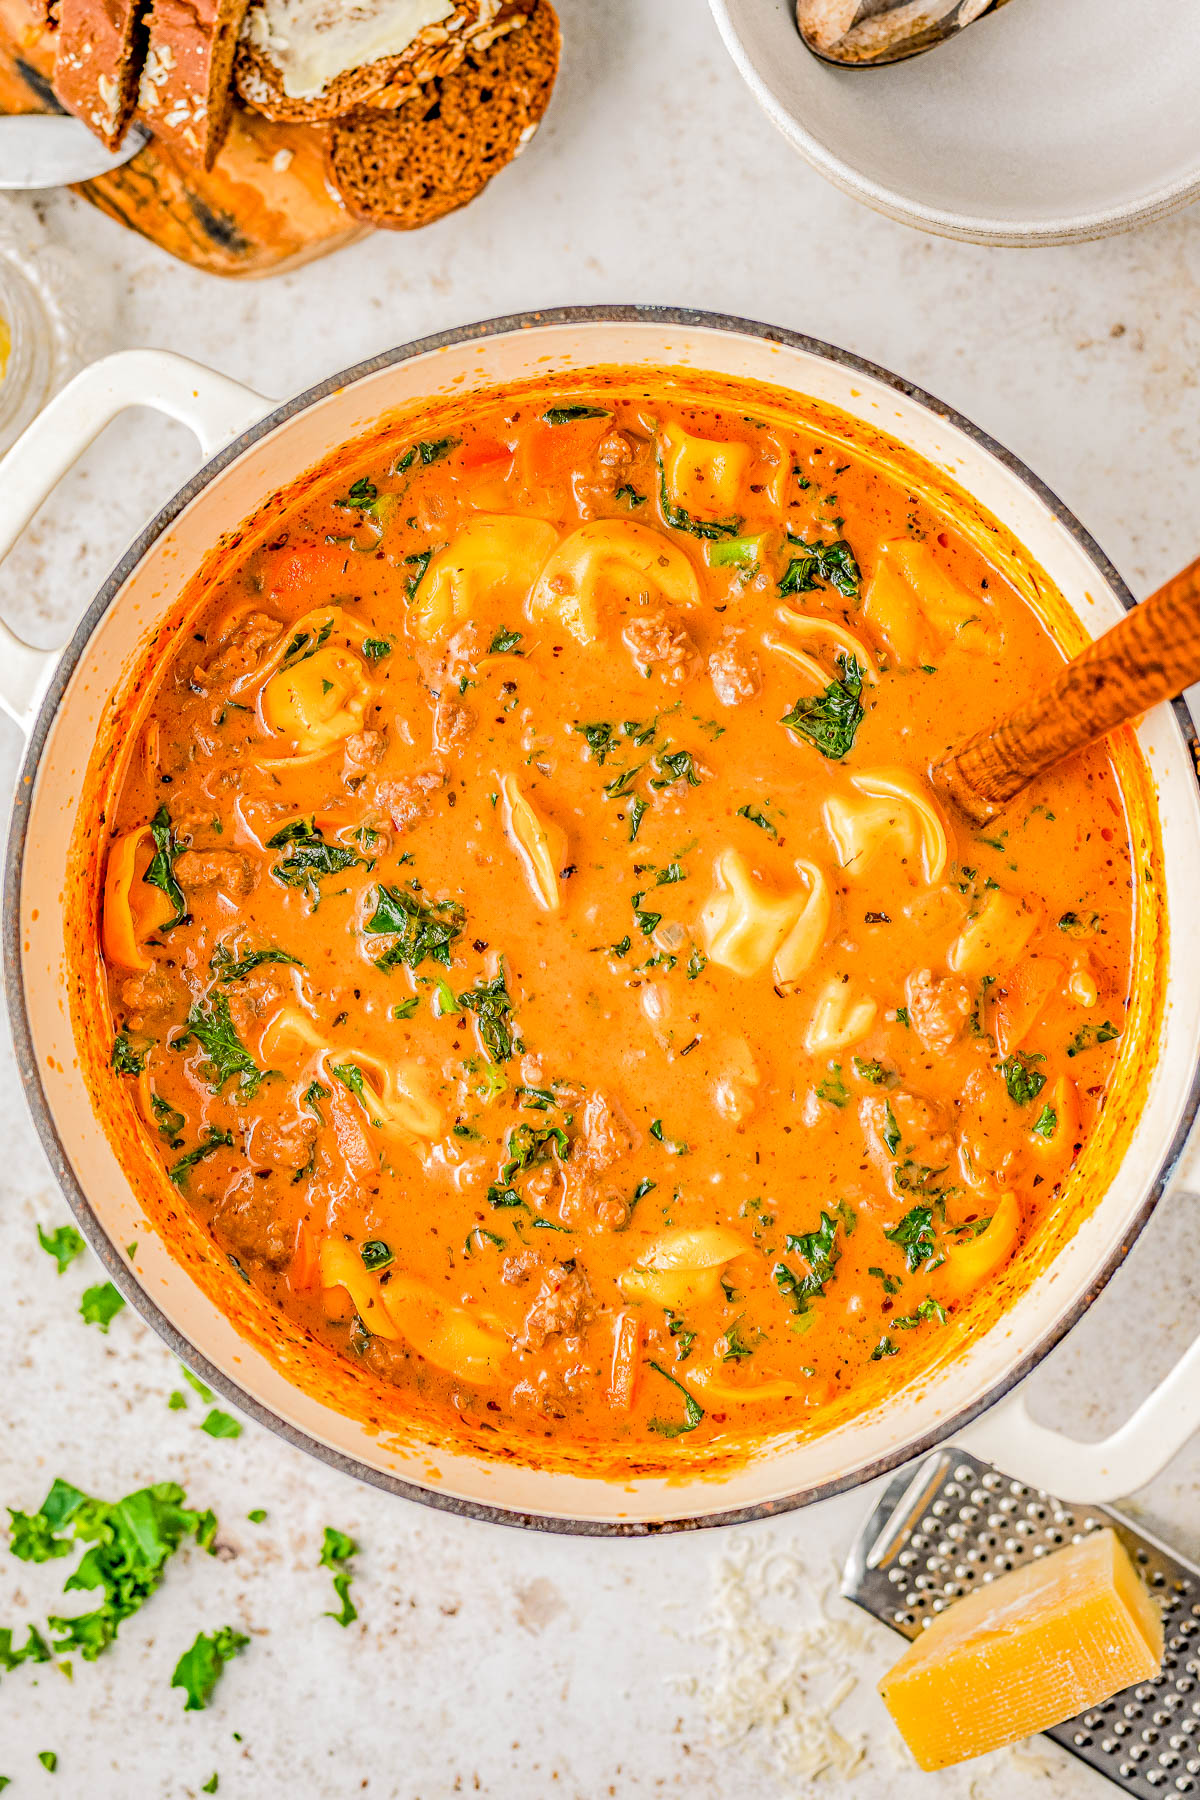 Tortelloni Tomato Soup with Sausage Recipe